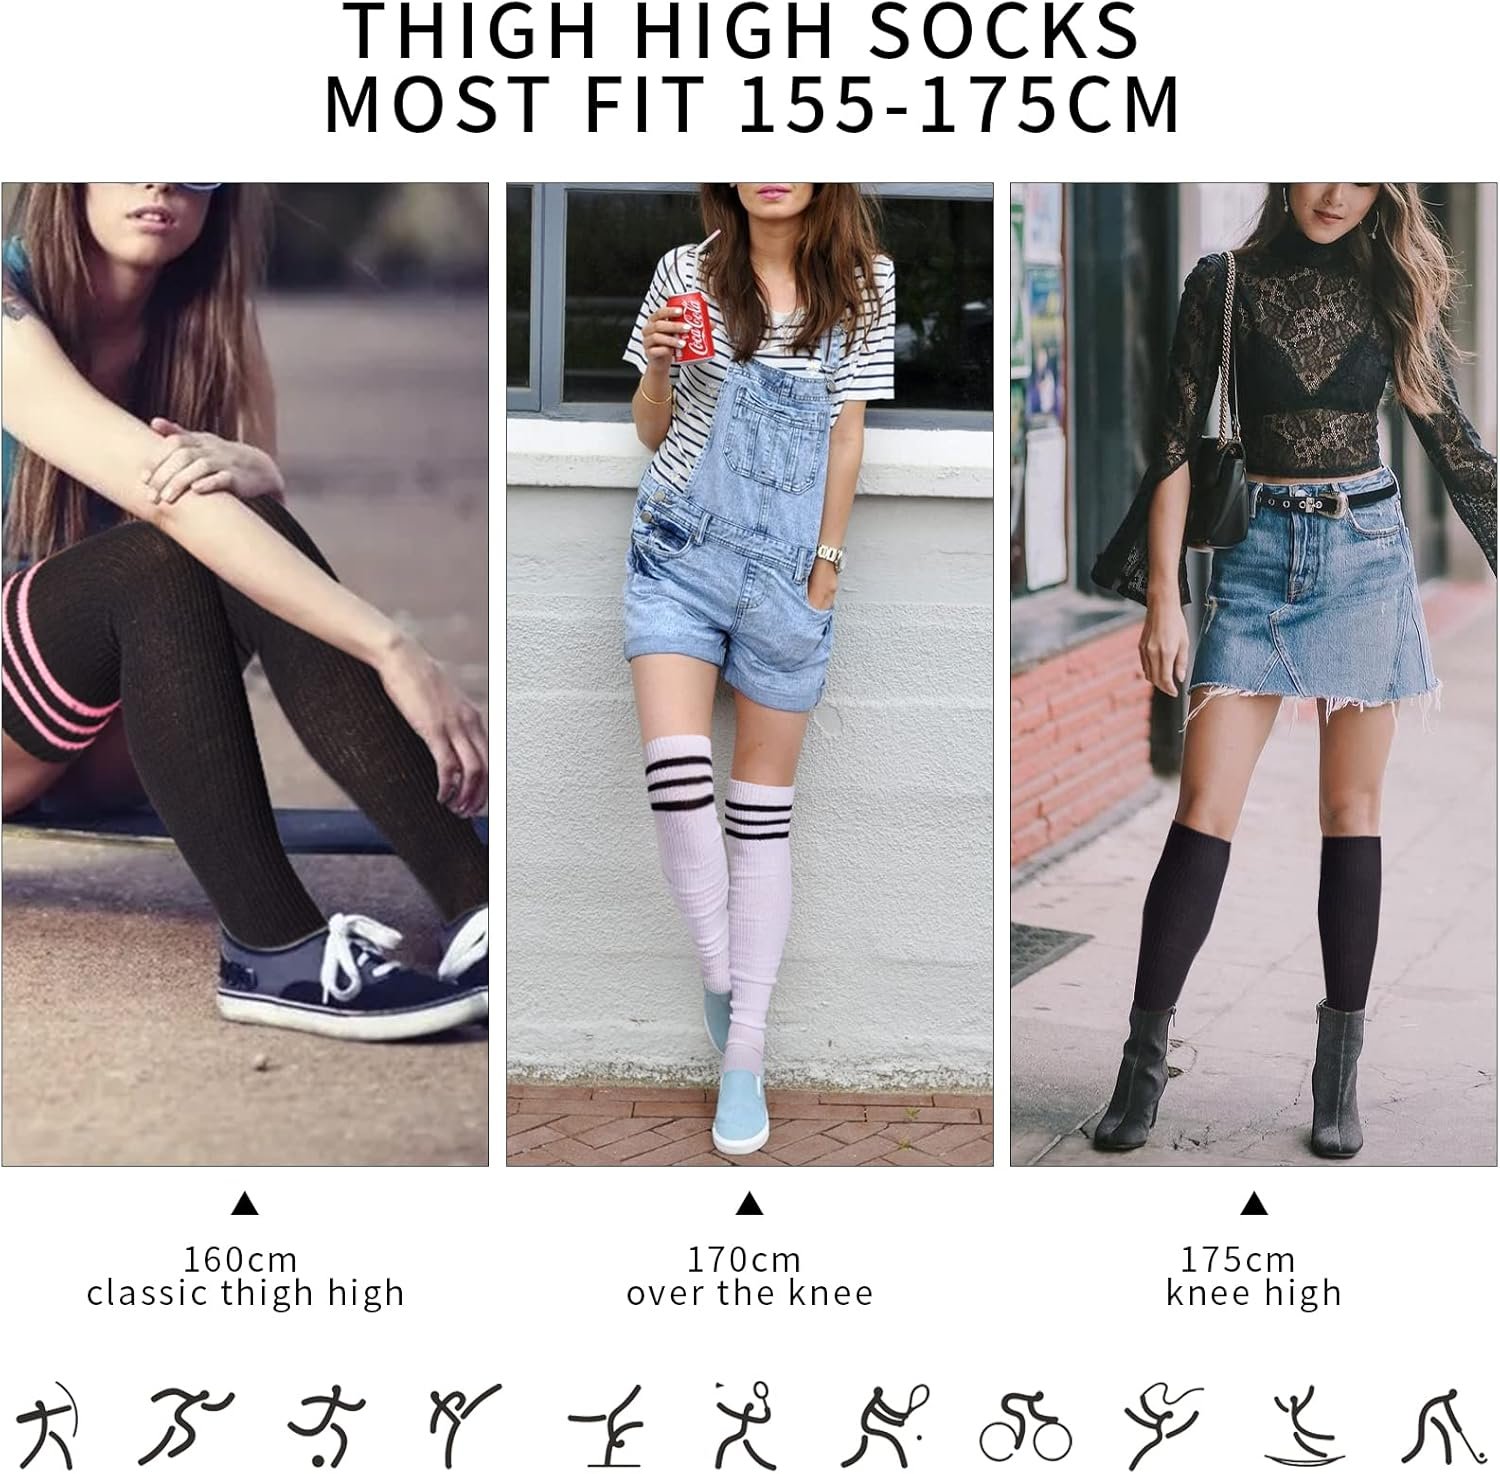 Abodhu Womens Thigh High Socks Review